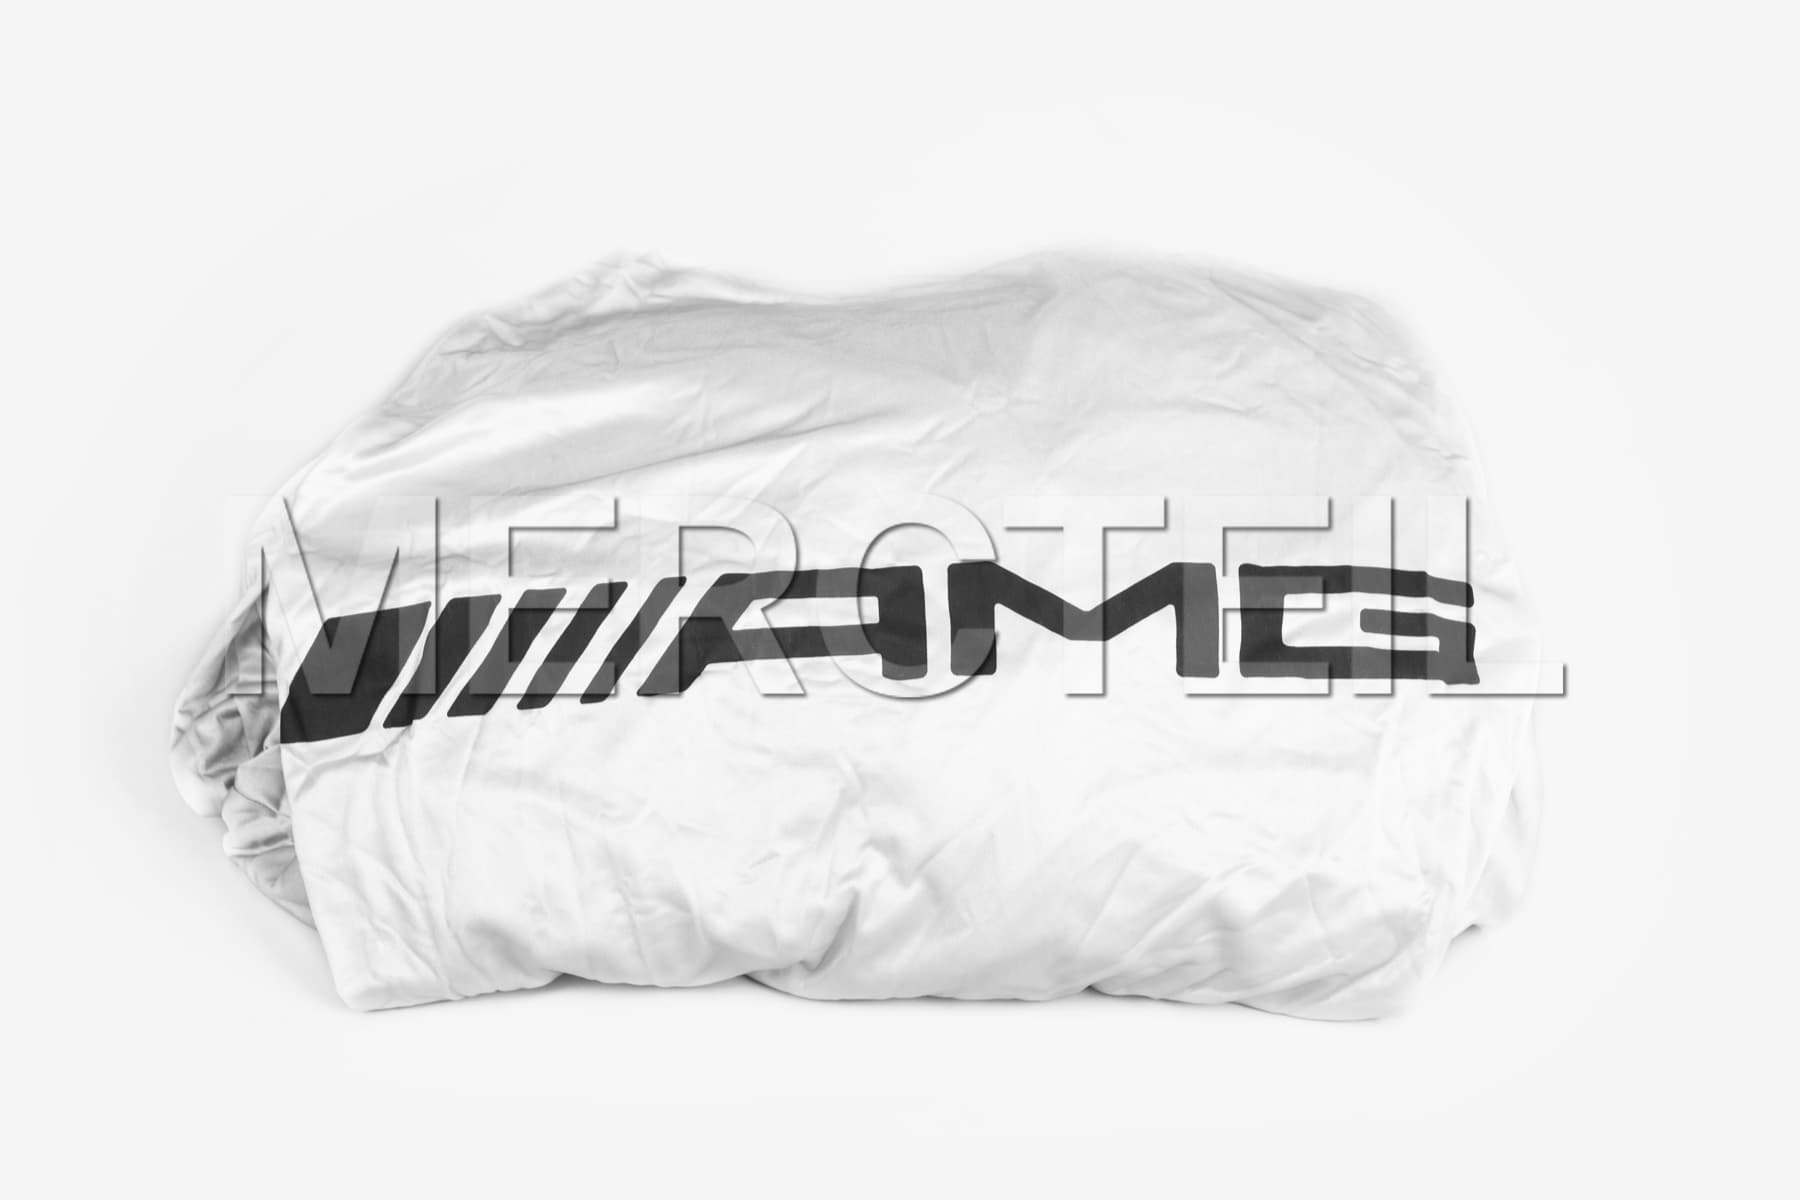 AMG Indoor Car Cover für AMG GT (Teilenummer: 	
A1908990100)